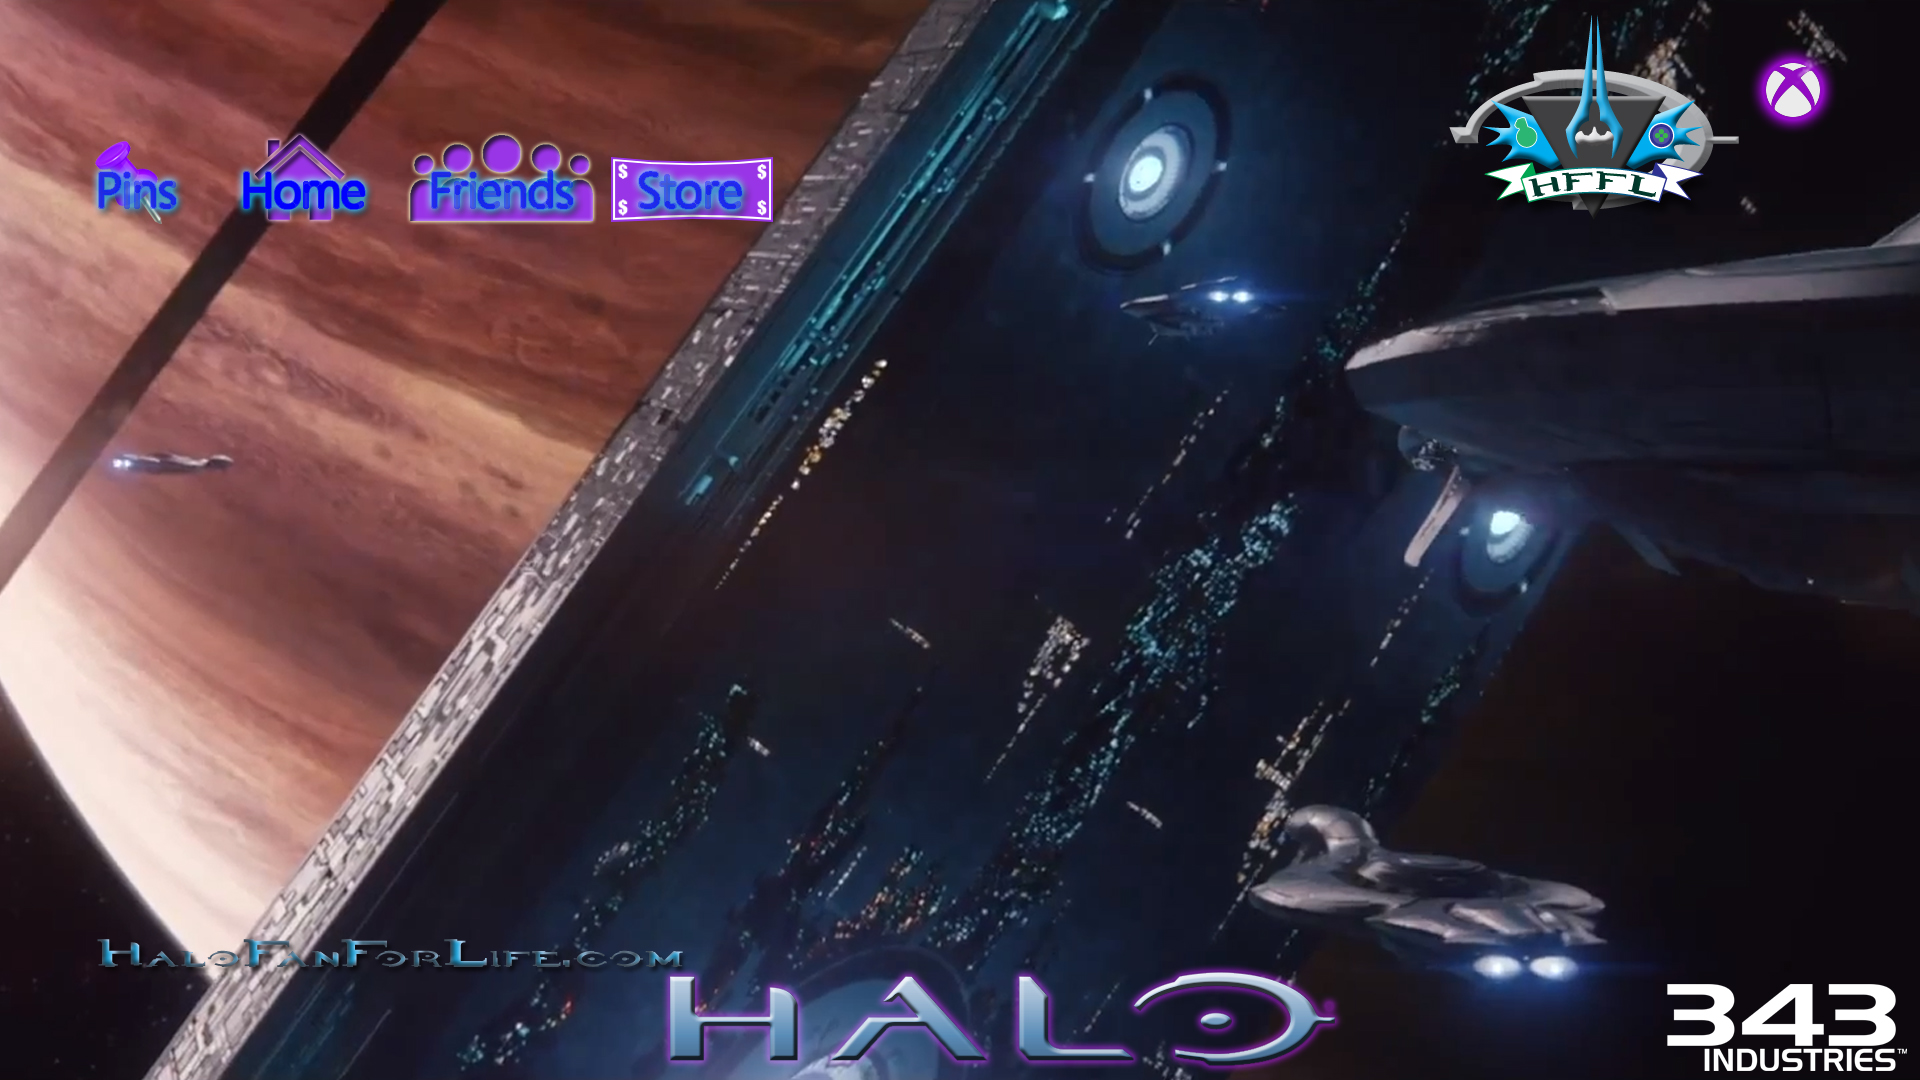 New Hffl Halo Xbox One Background To